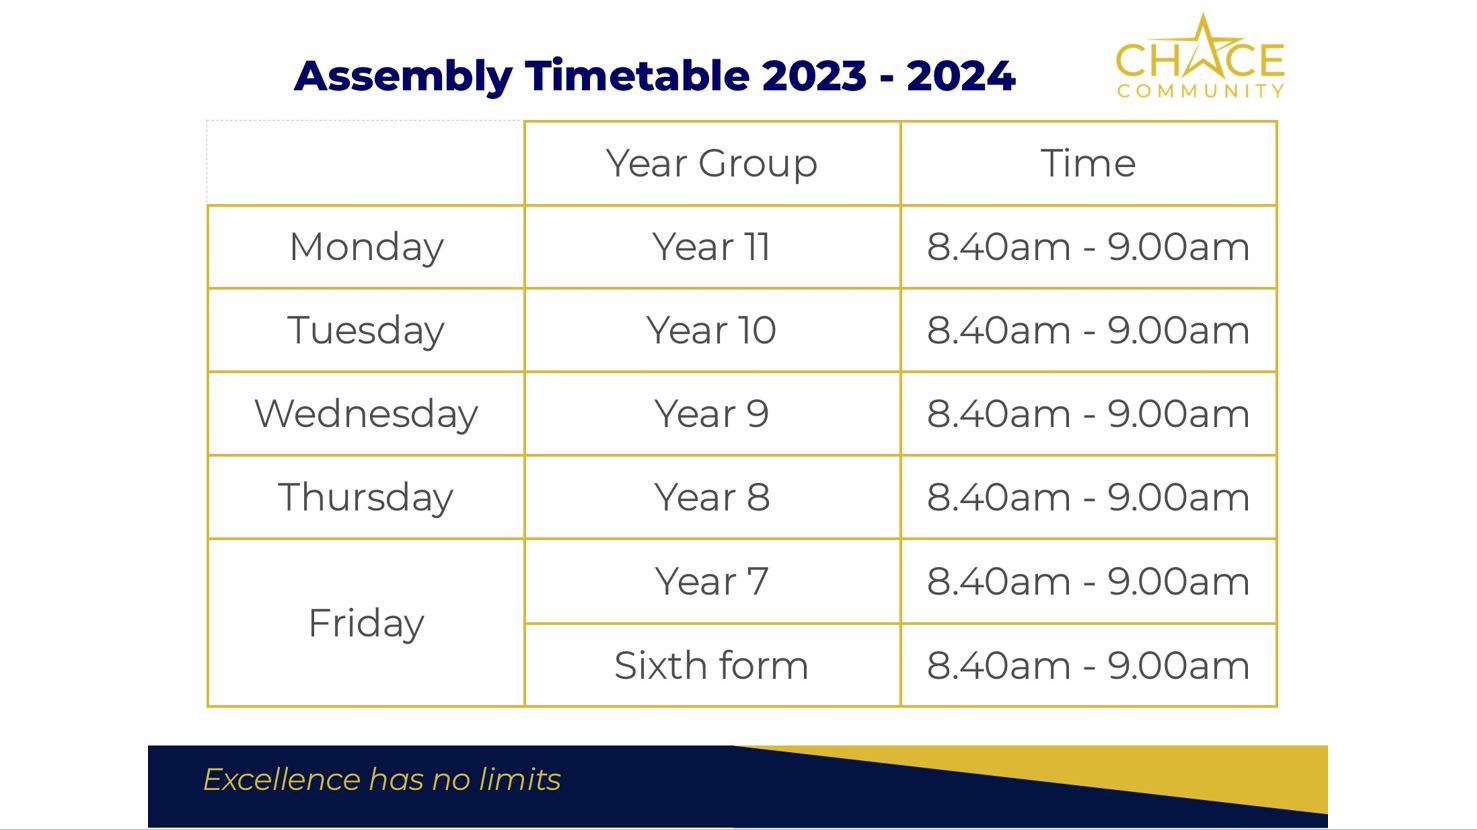 https://www.chace.enfield.sch.uk/wp-content/uploads/2023/09/Assemblt-Timetable-2023-2024.jpg